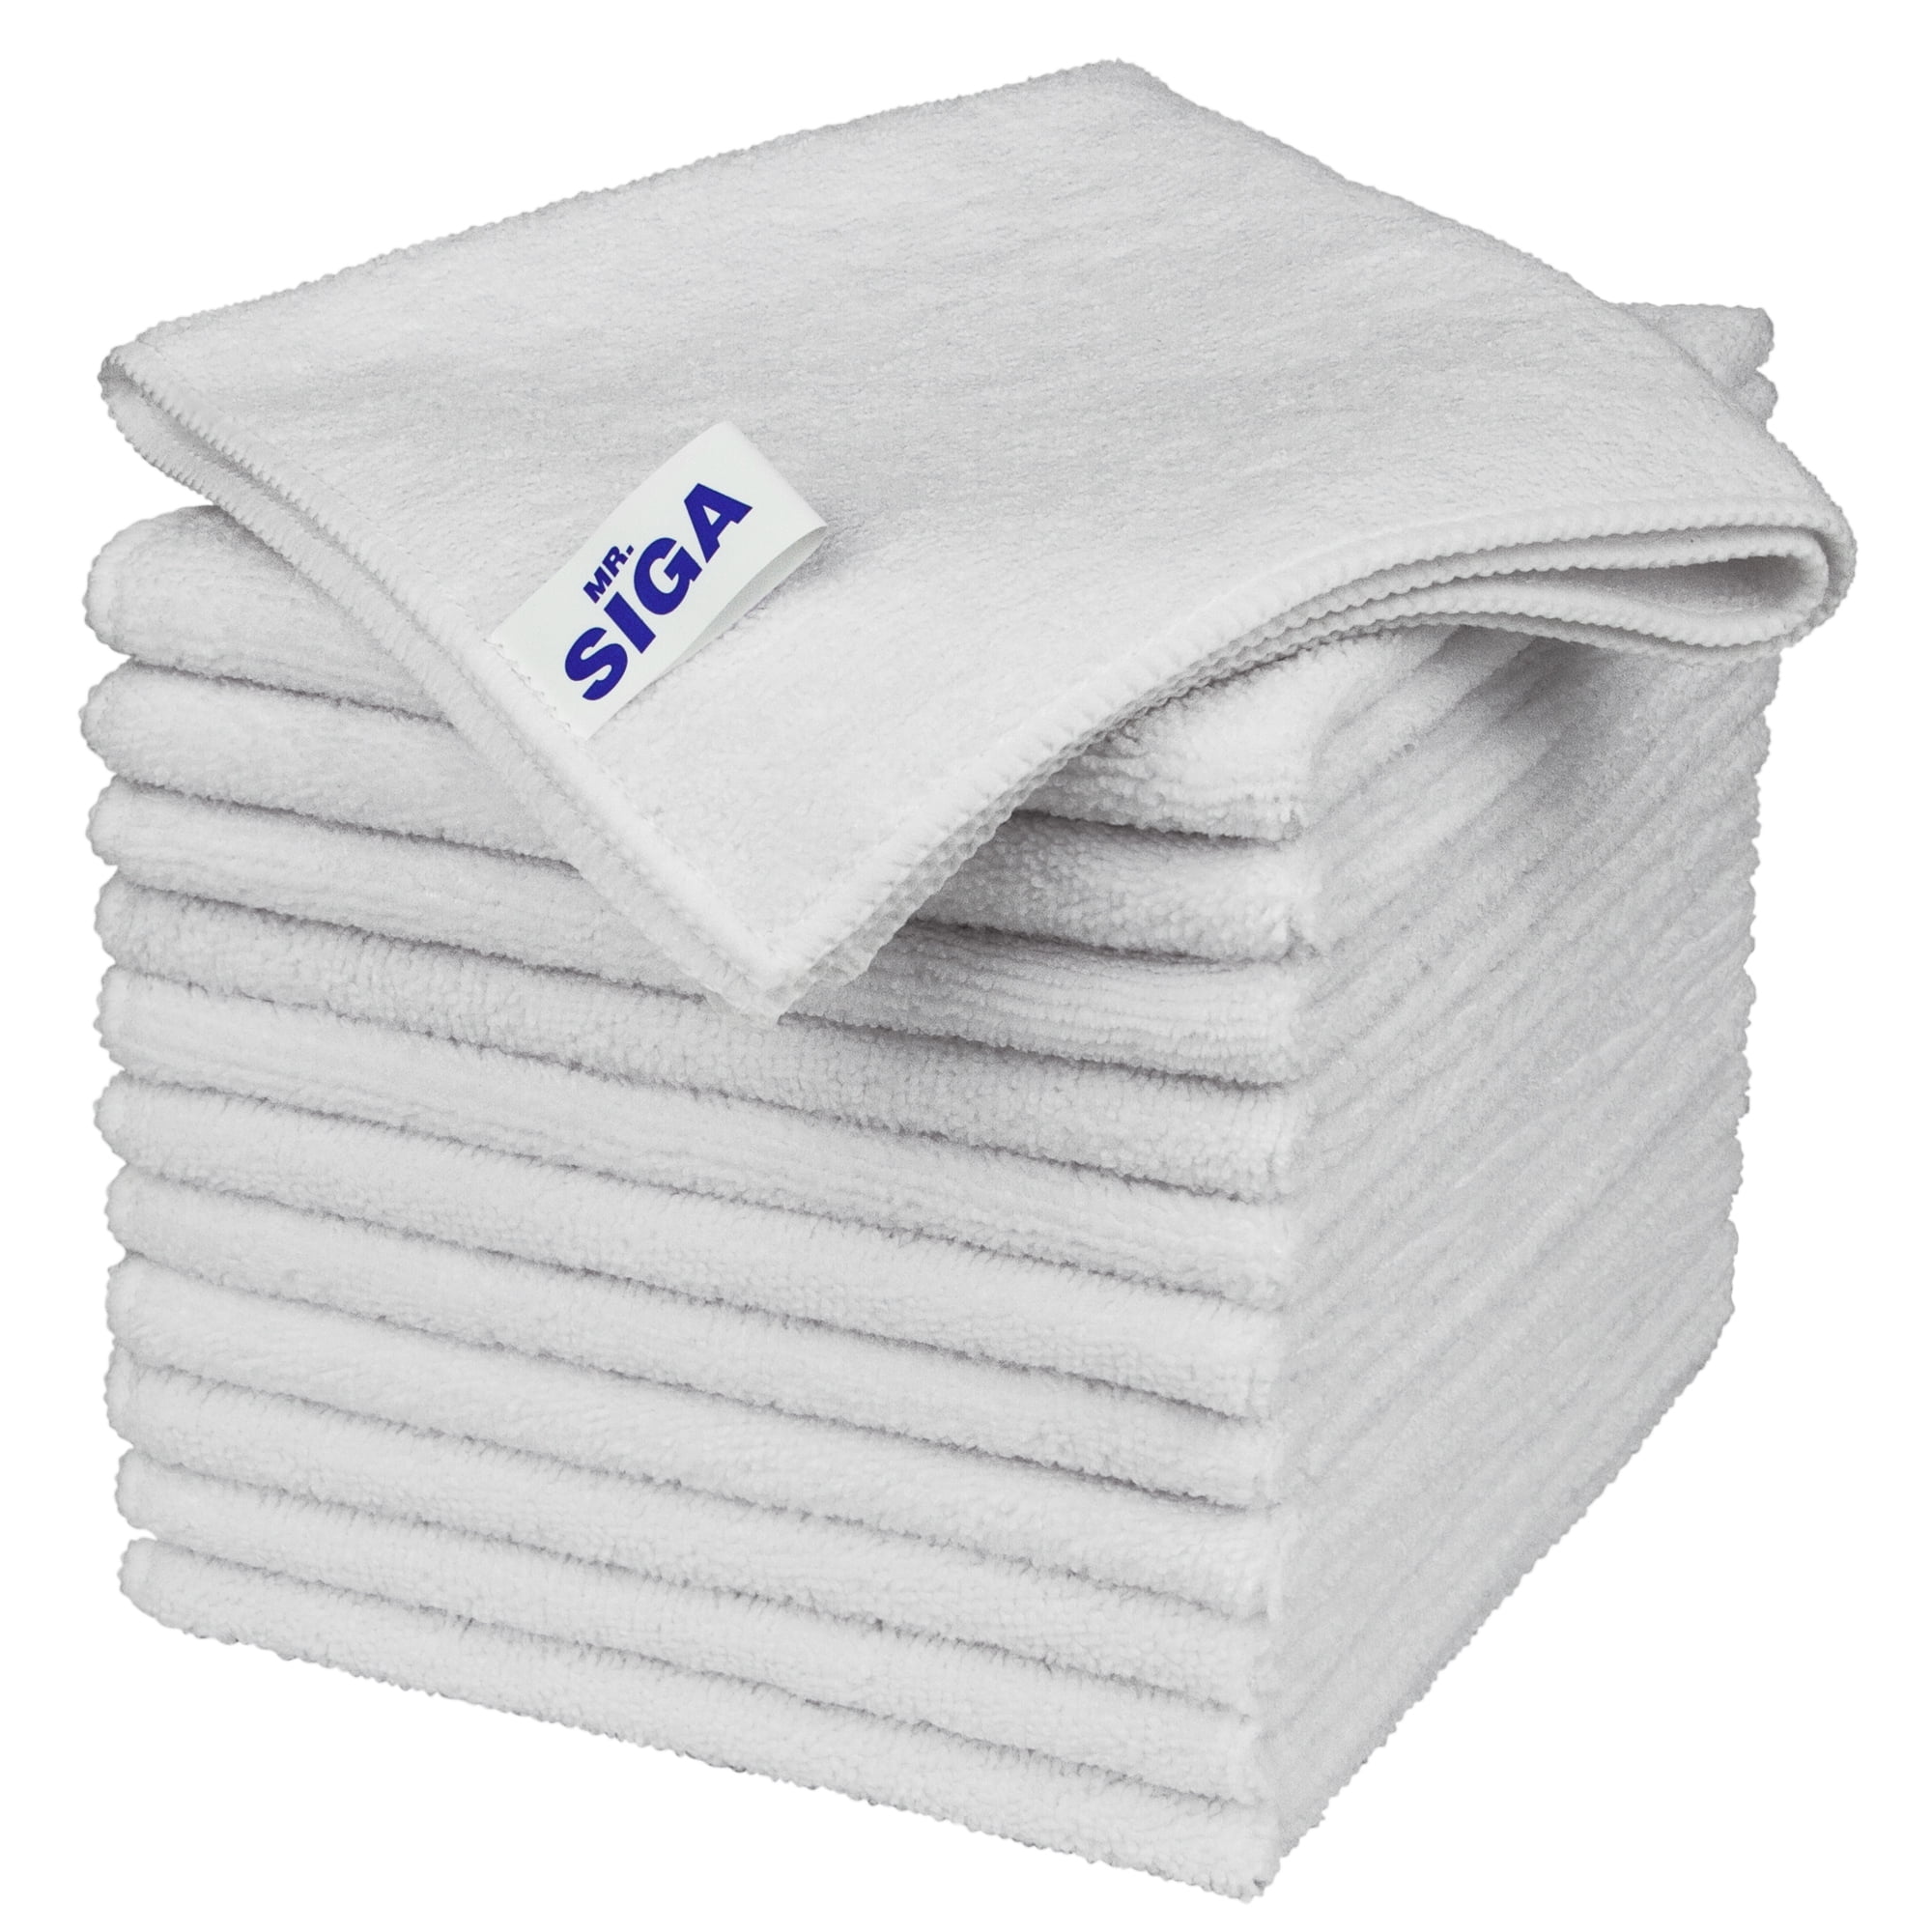 Lg Shammy Cloth - Absorbent Chamois Towel (3pk)